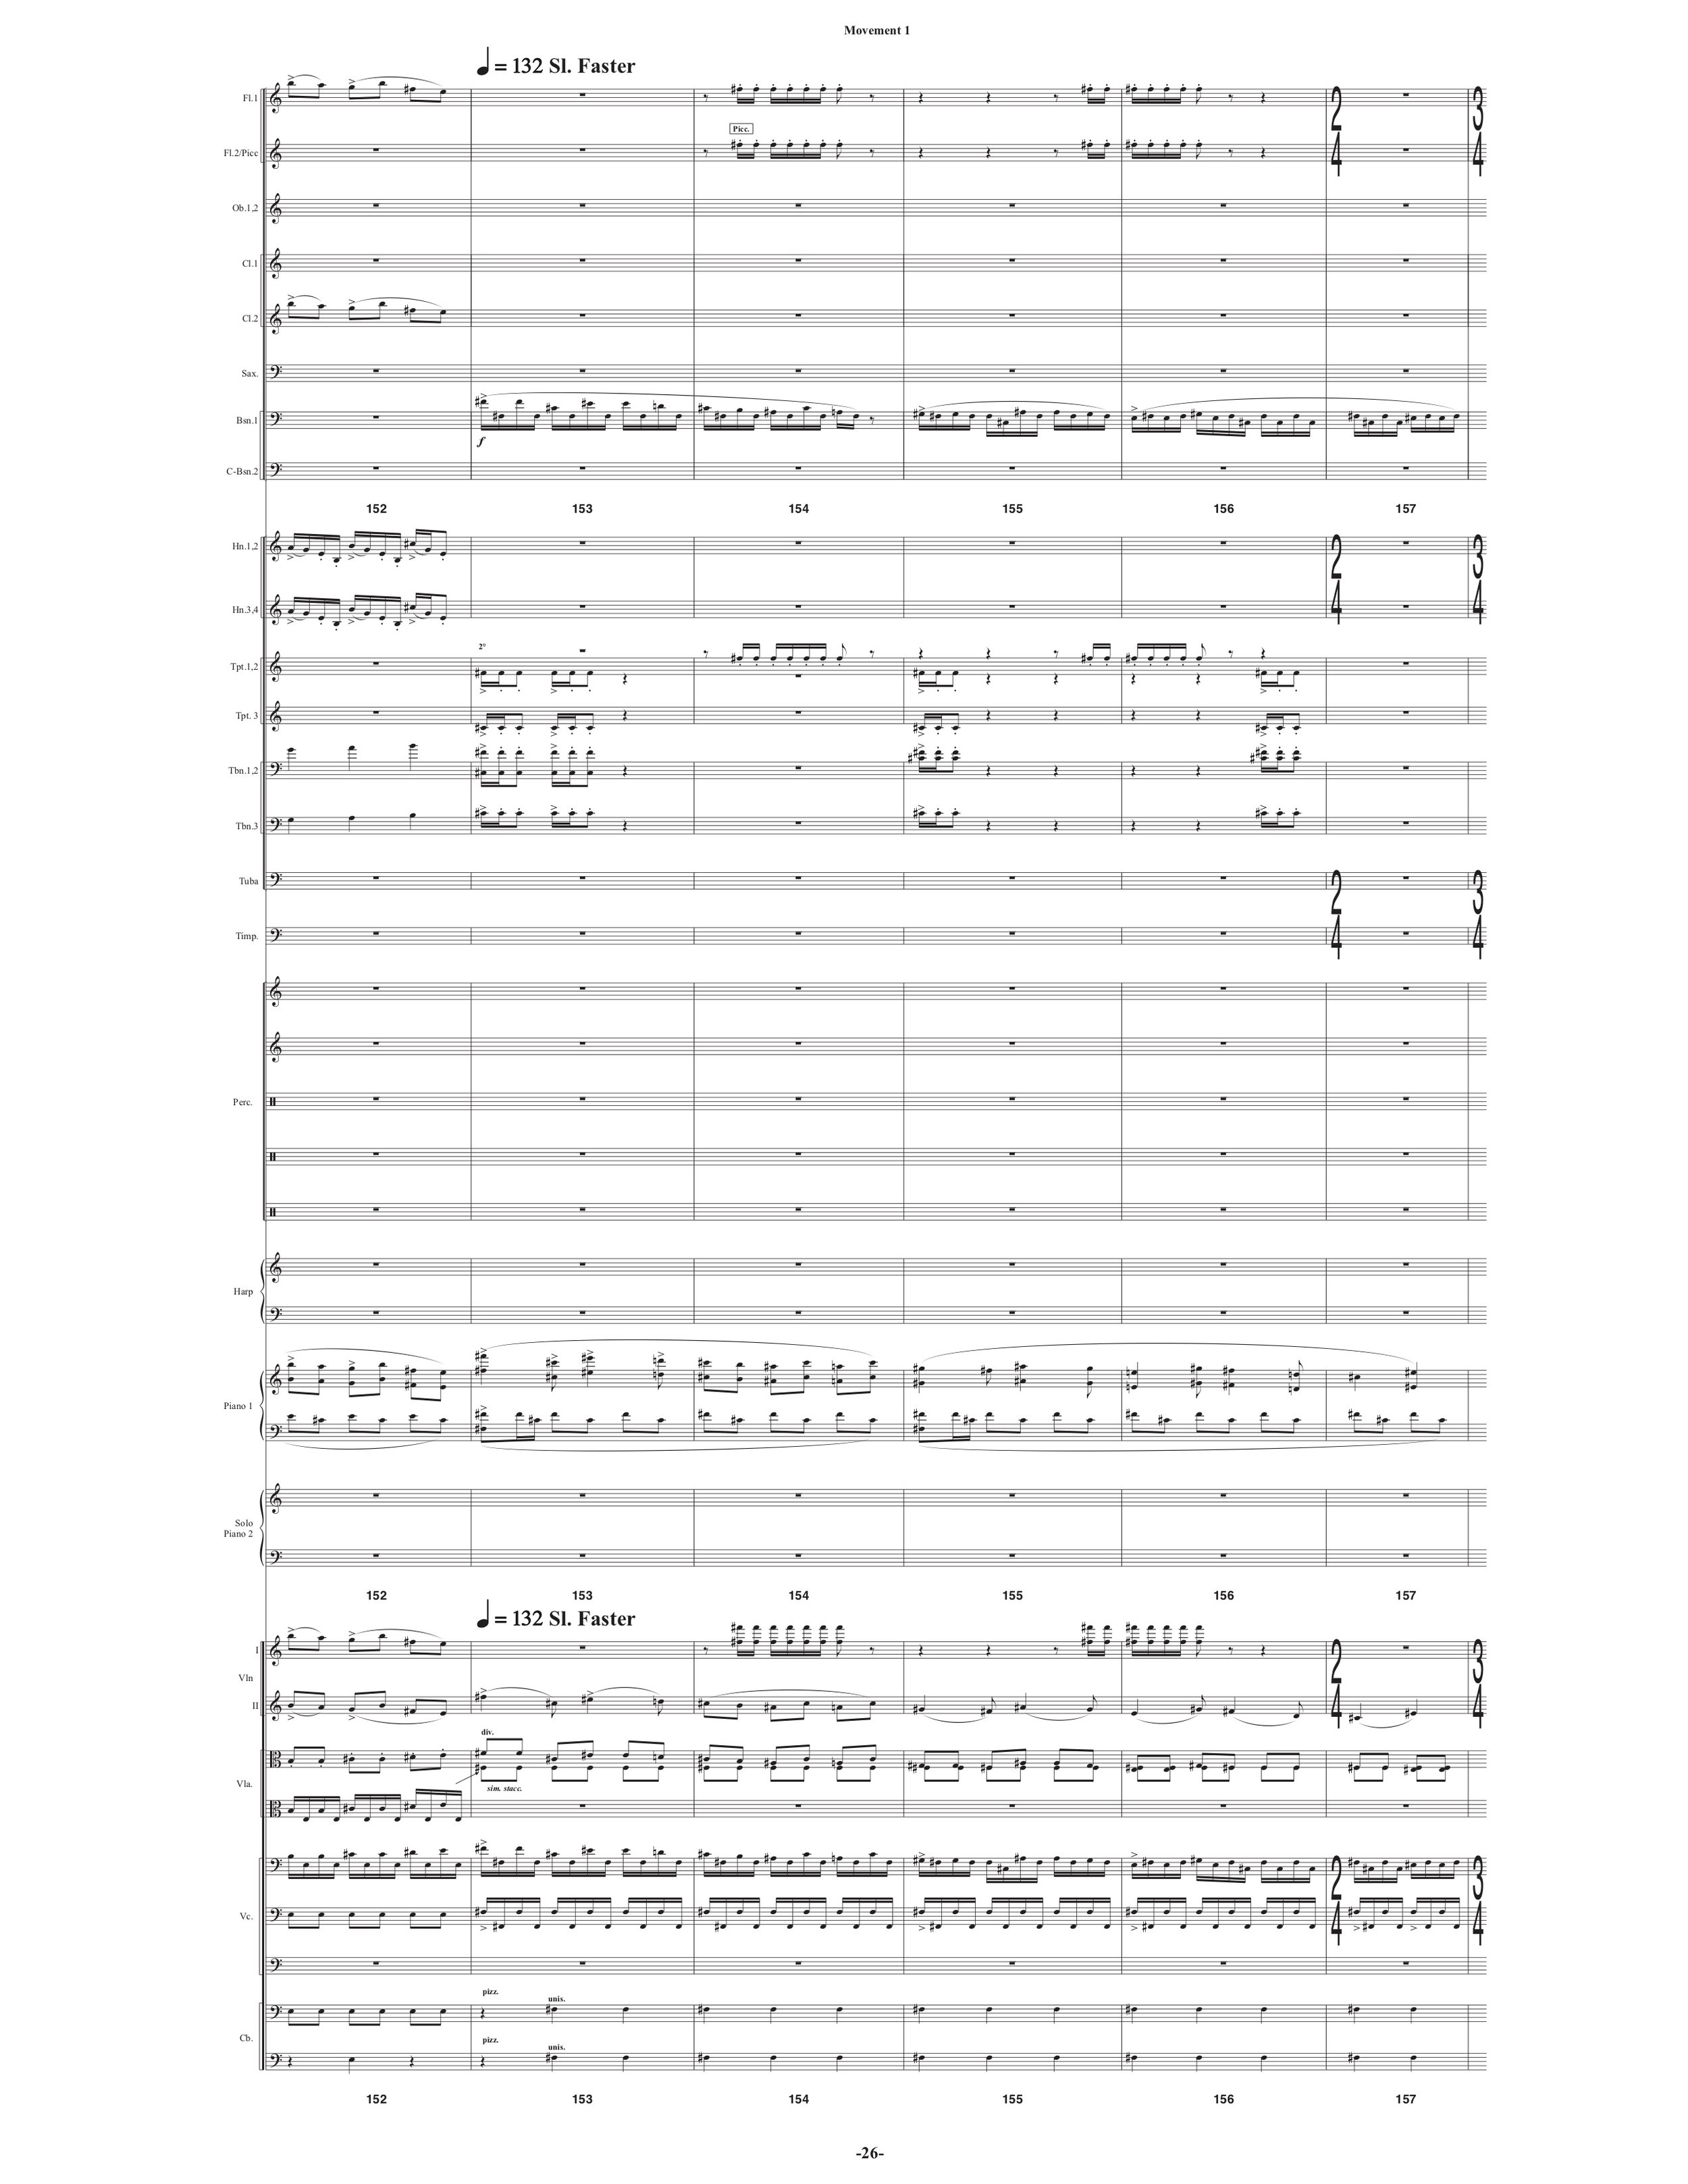 Symphony_Orch & 2 Pianos p31.jpg